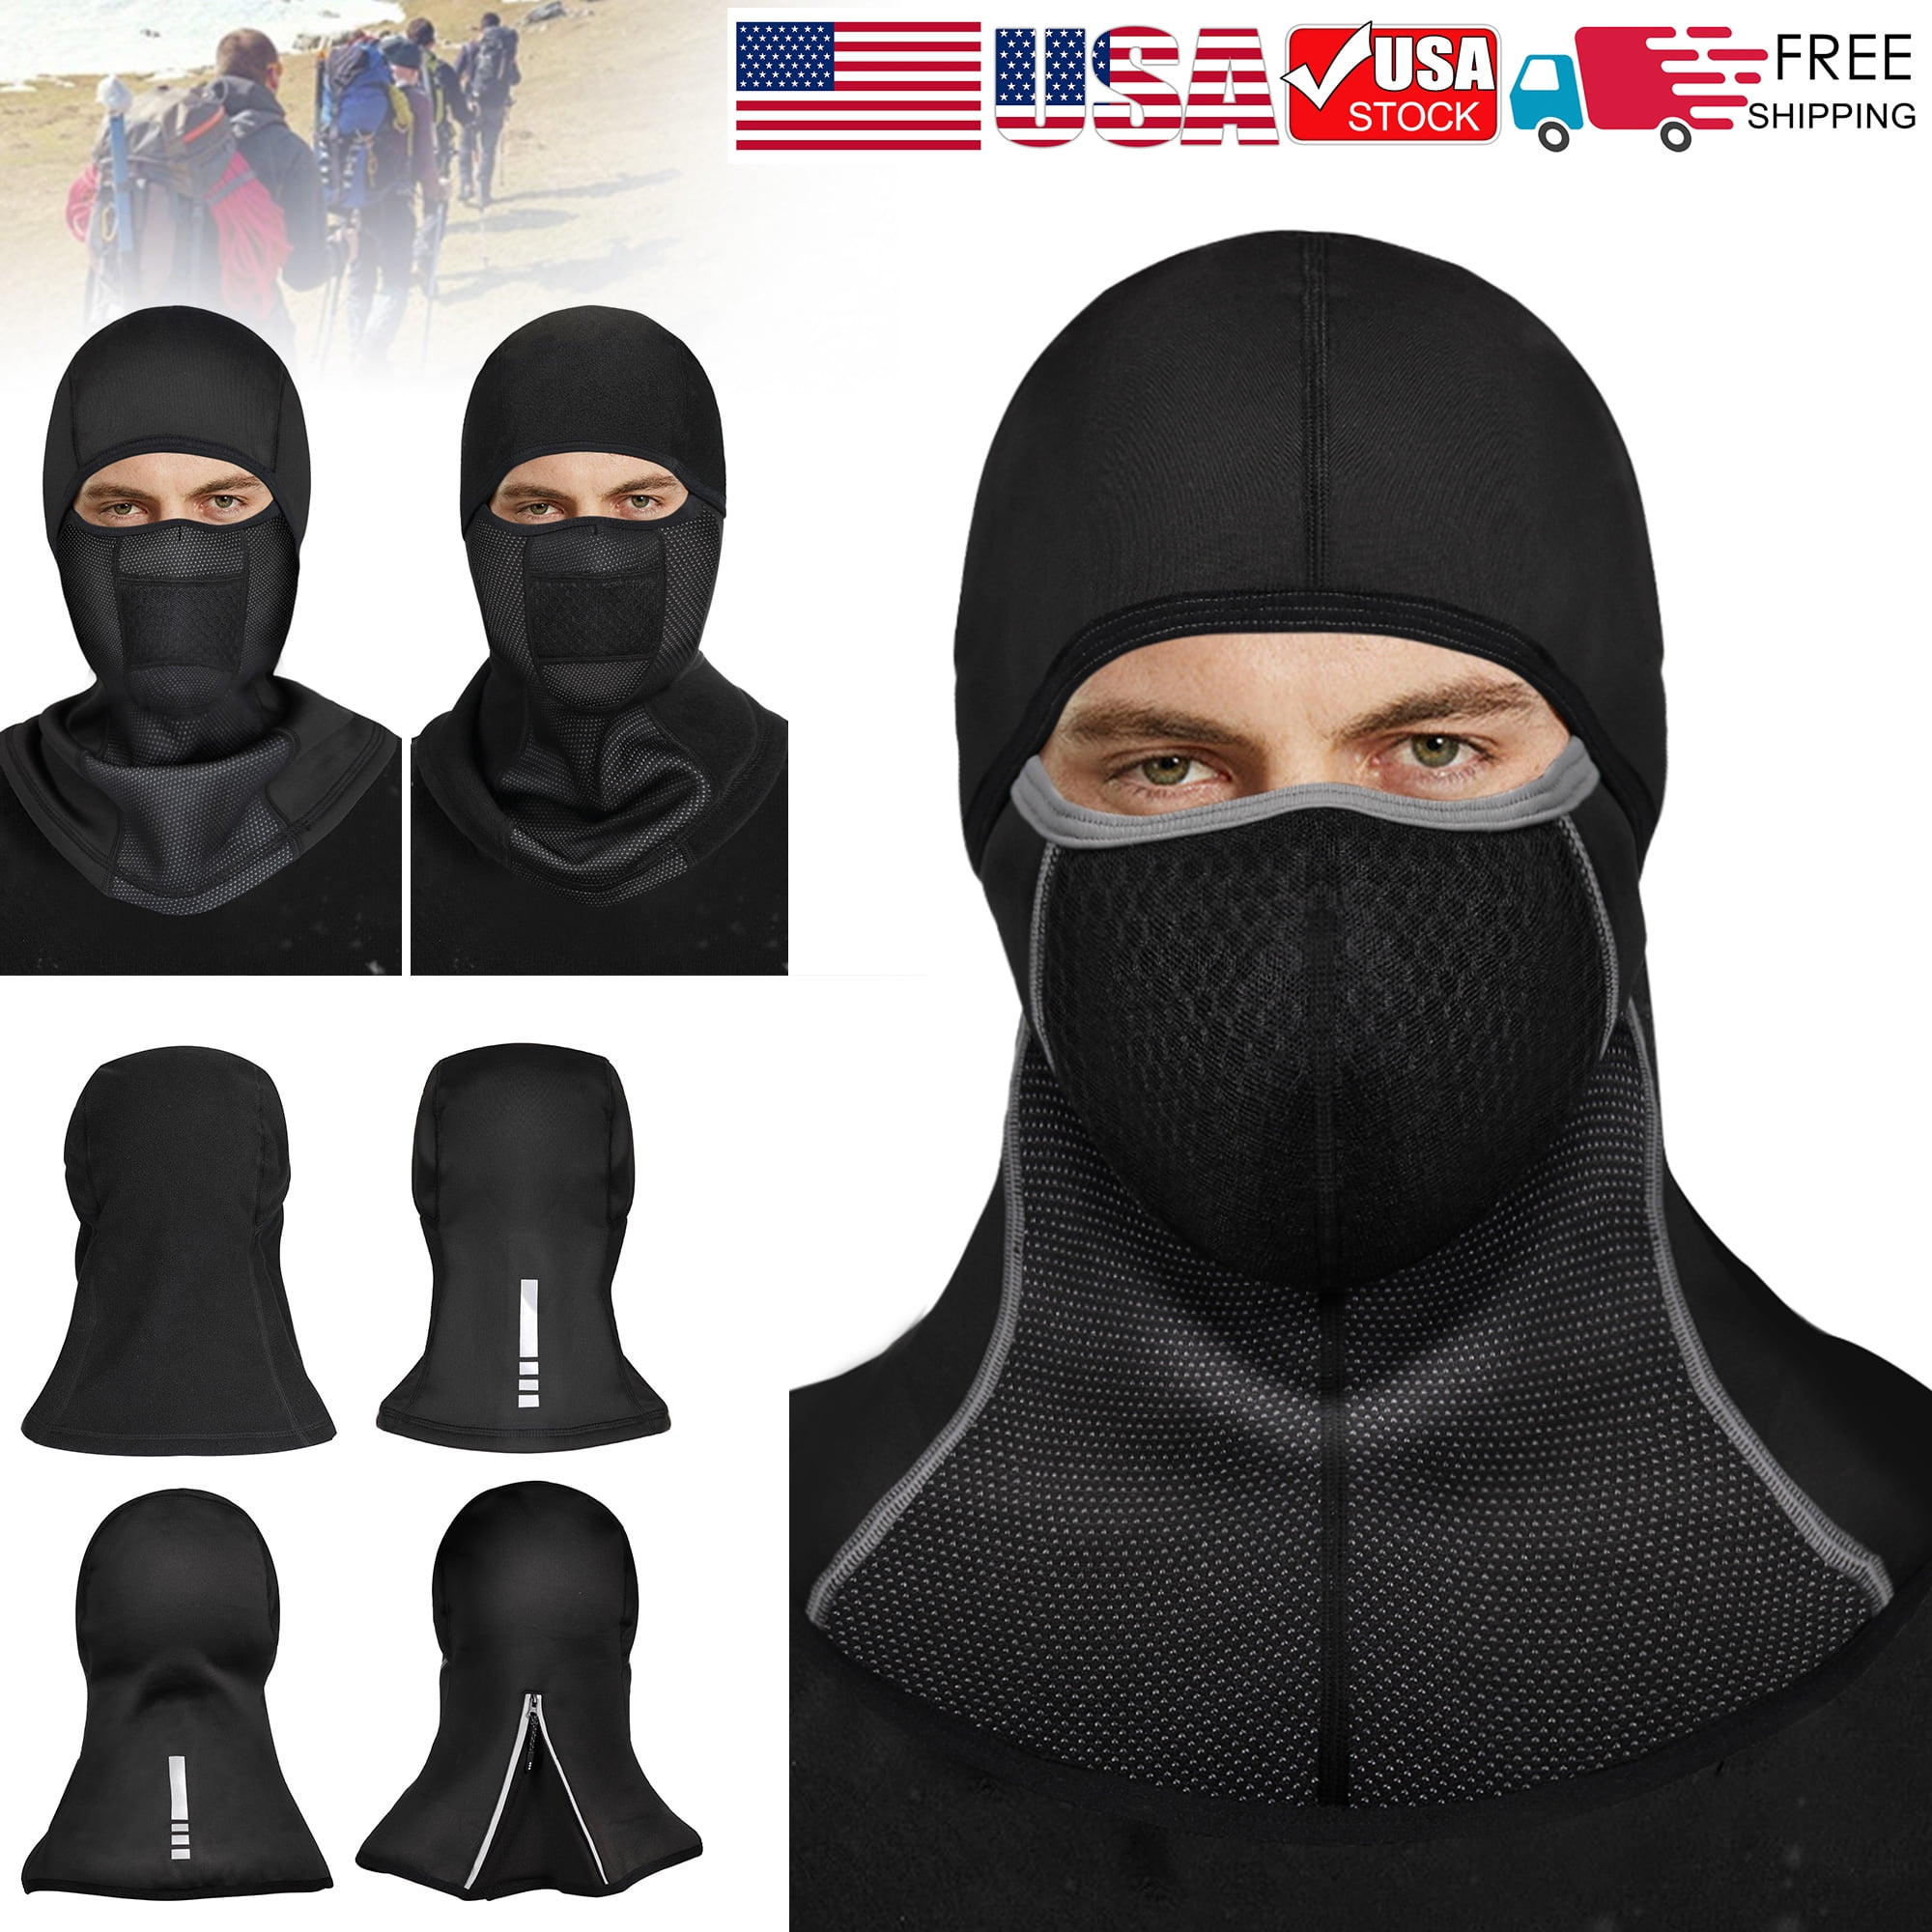 Motorcycle Cycling Balaclava Full Face Masks Warmer Helmet Ski Neck Snood Cover